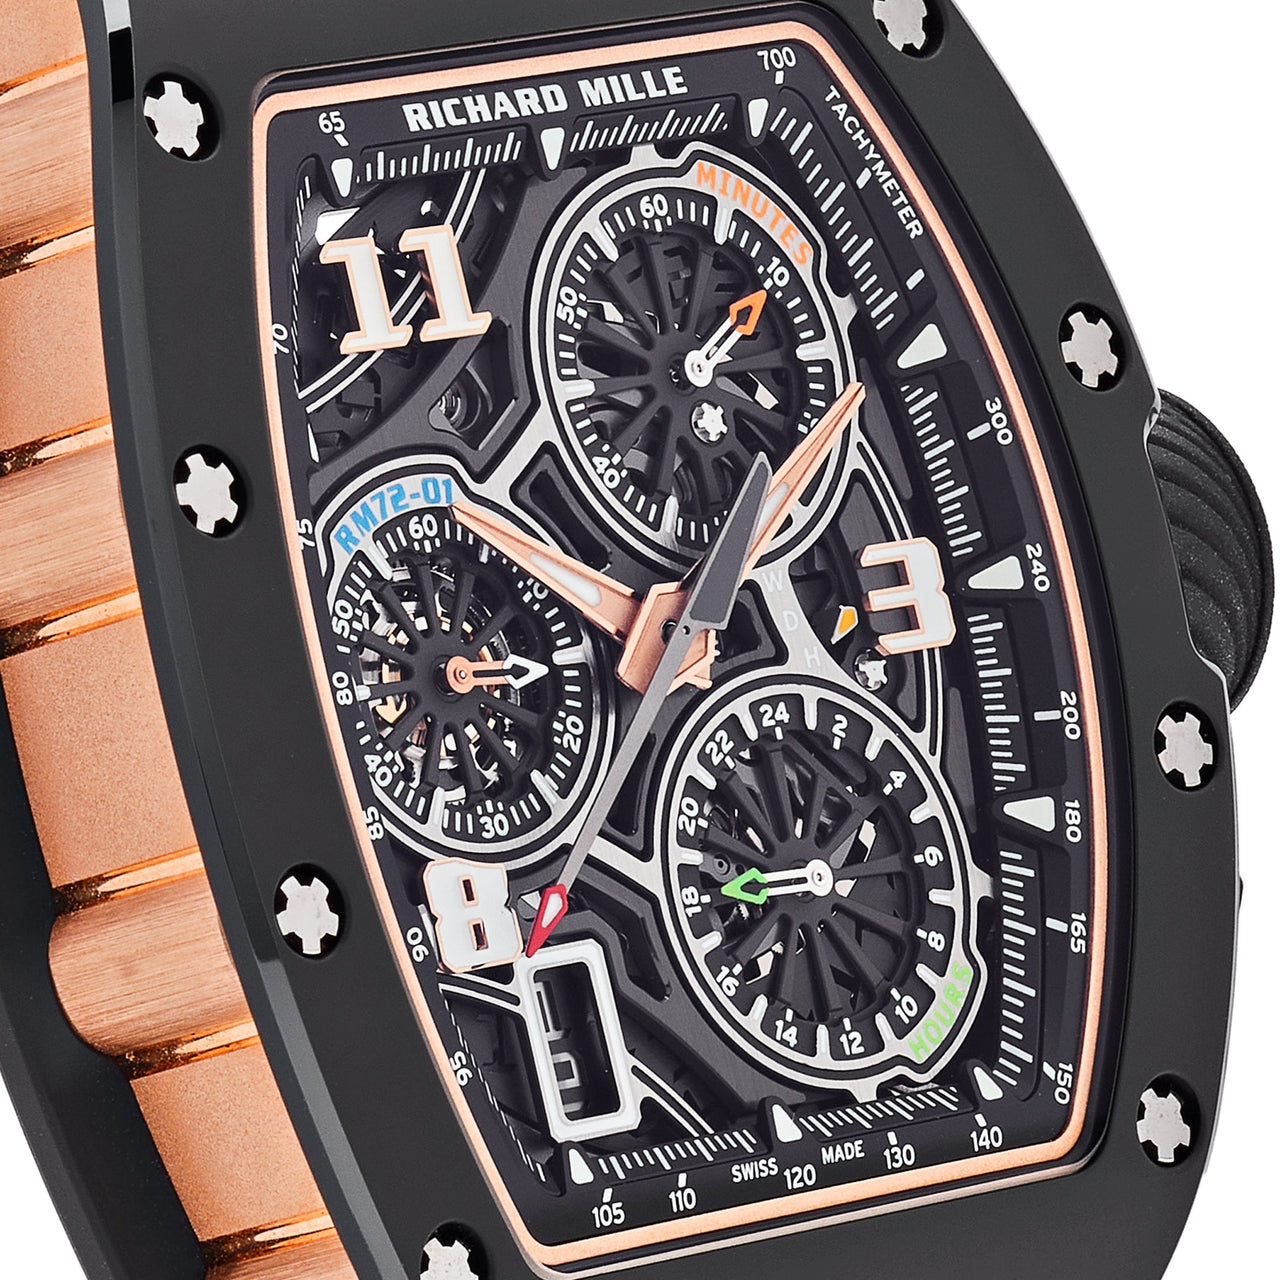 Luxury Watch Richard Mille Lifestyle IN-HOUSE Chronograph Black Ceramic RM72-01 Wrist Aficionado